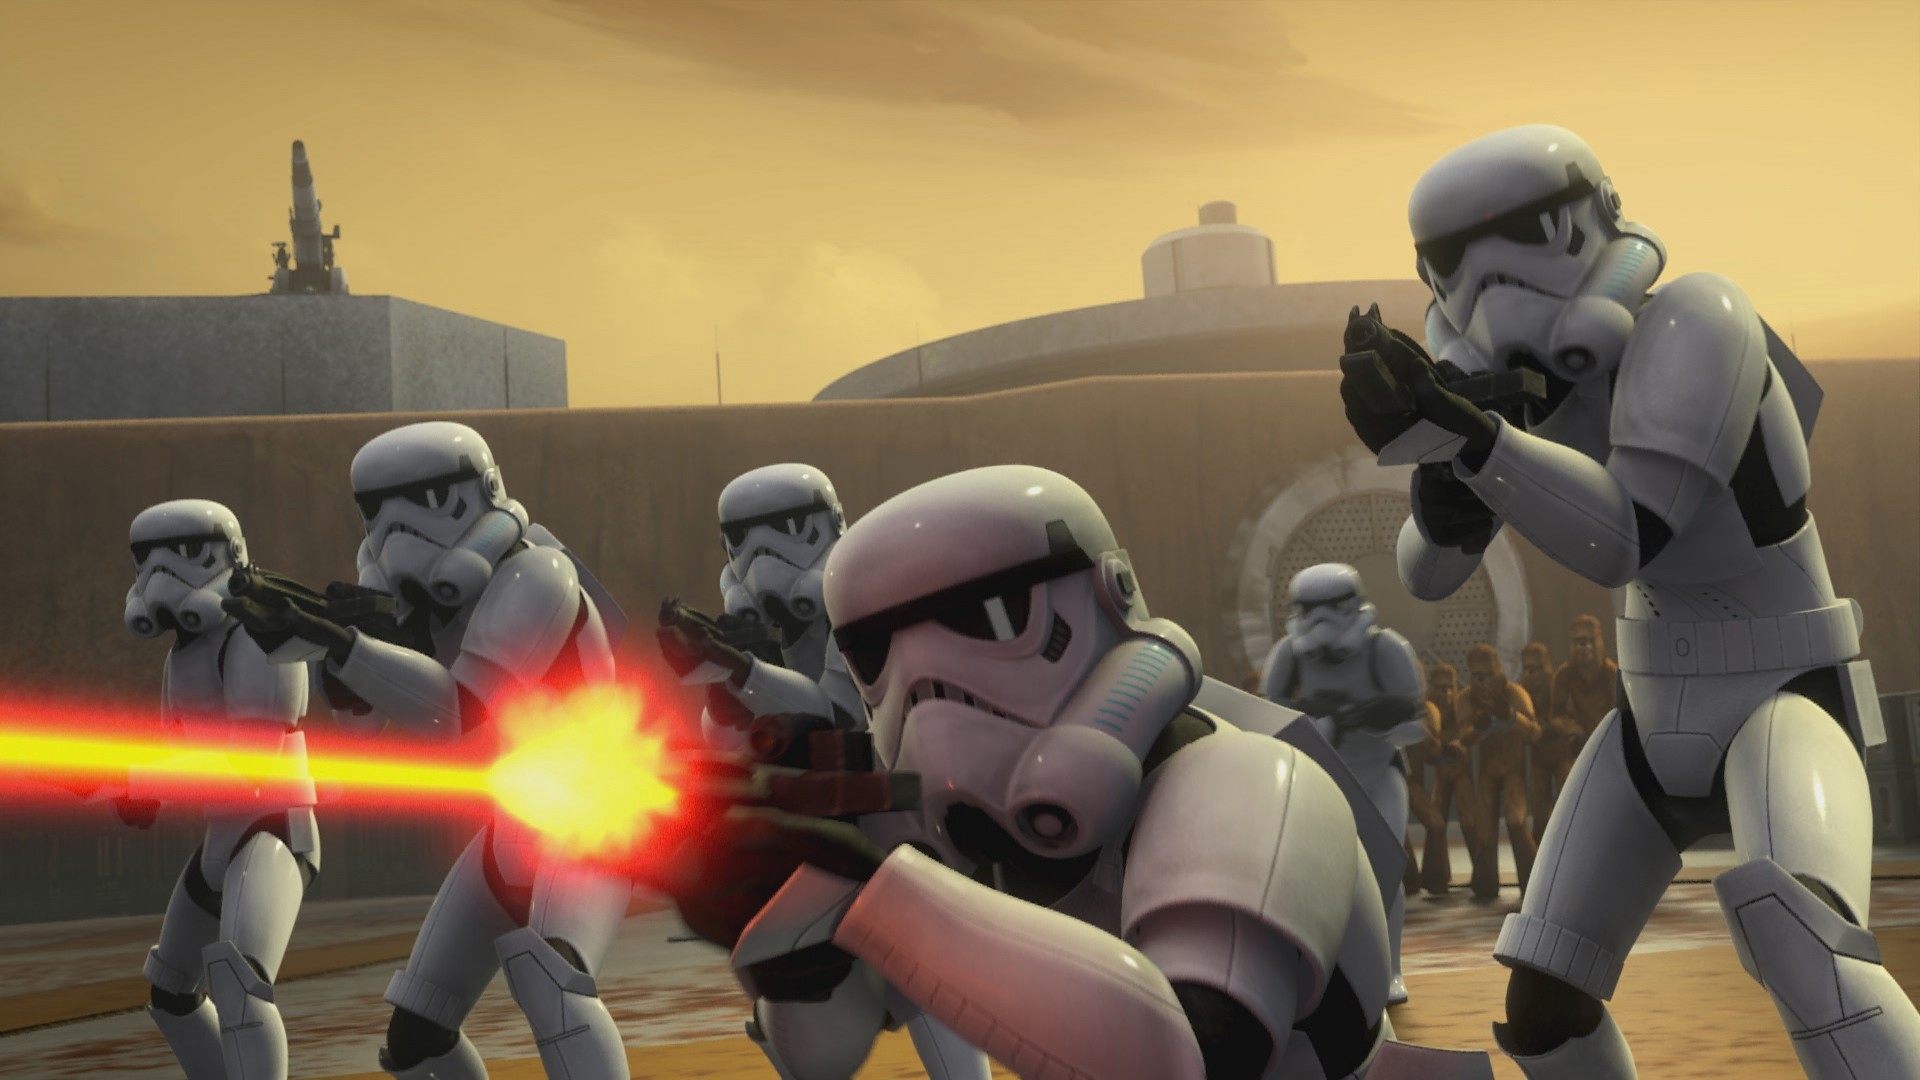 Image – Star wars rebels trailer stormtroopers Star Wars Rebels Wiki FANDOM powered by Wikia